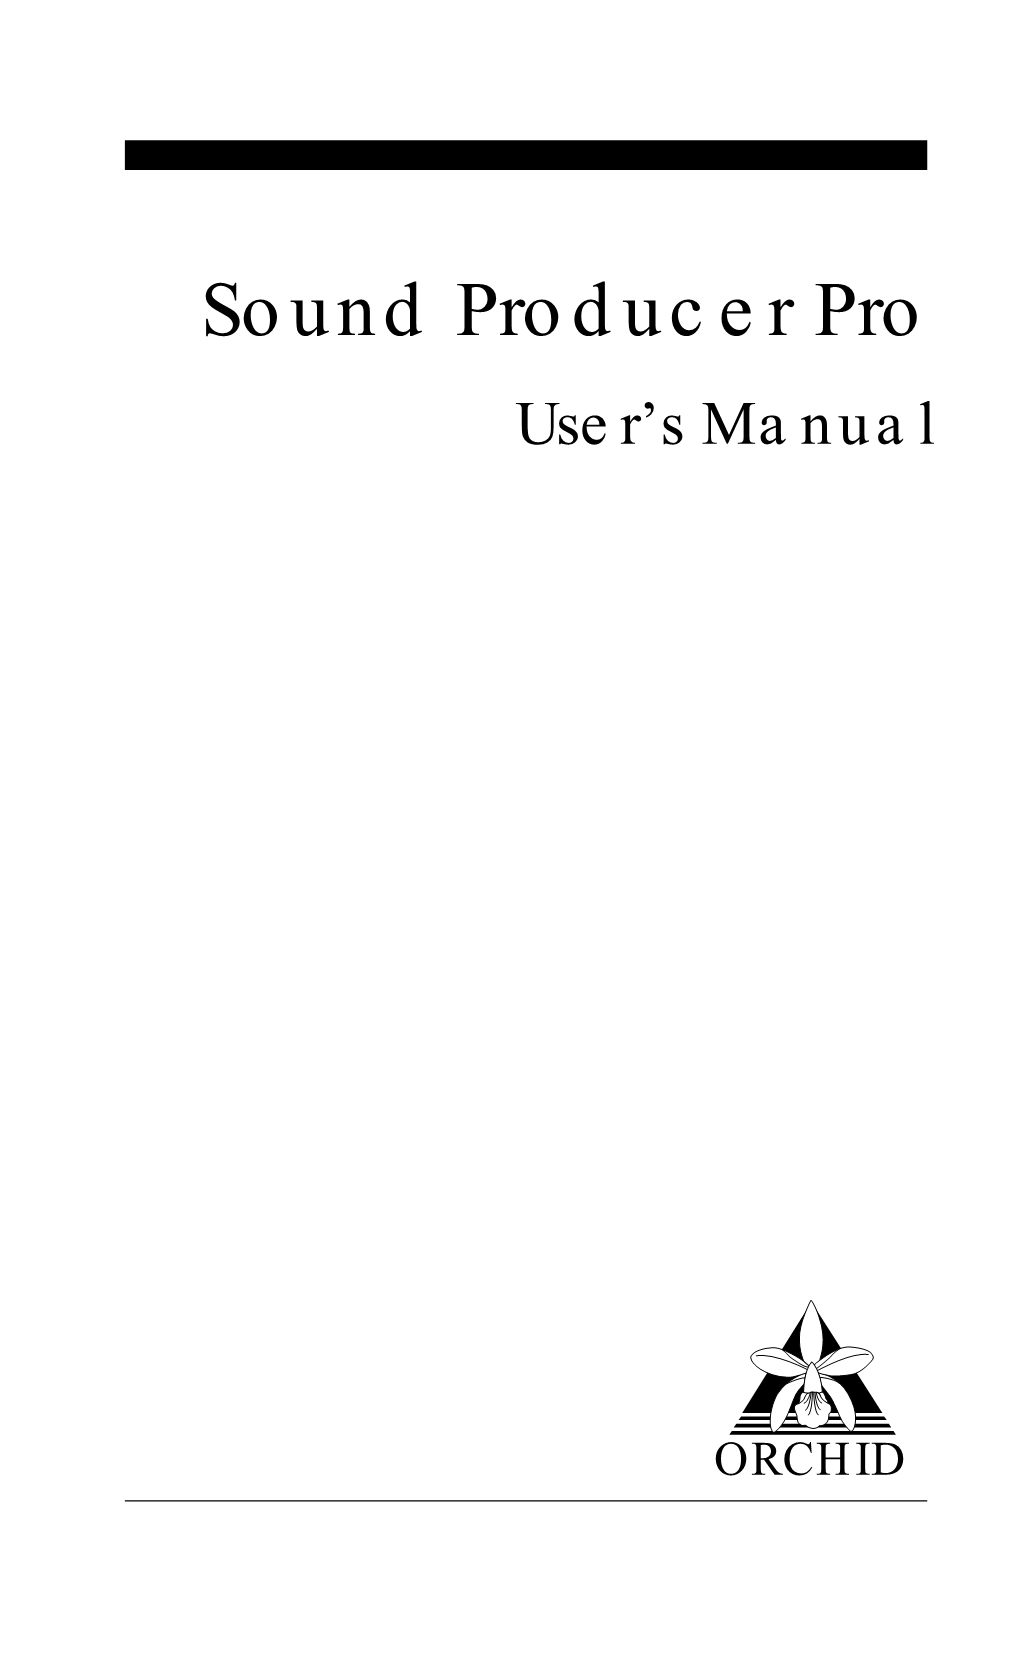 Sound Producer Pro User’S Manual